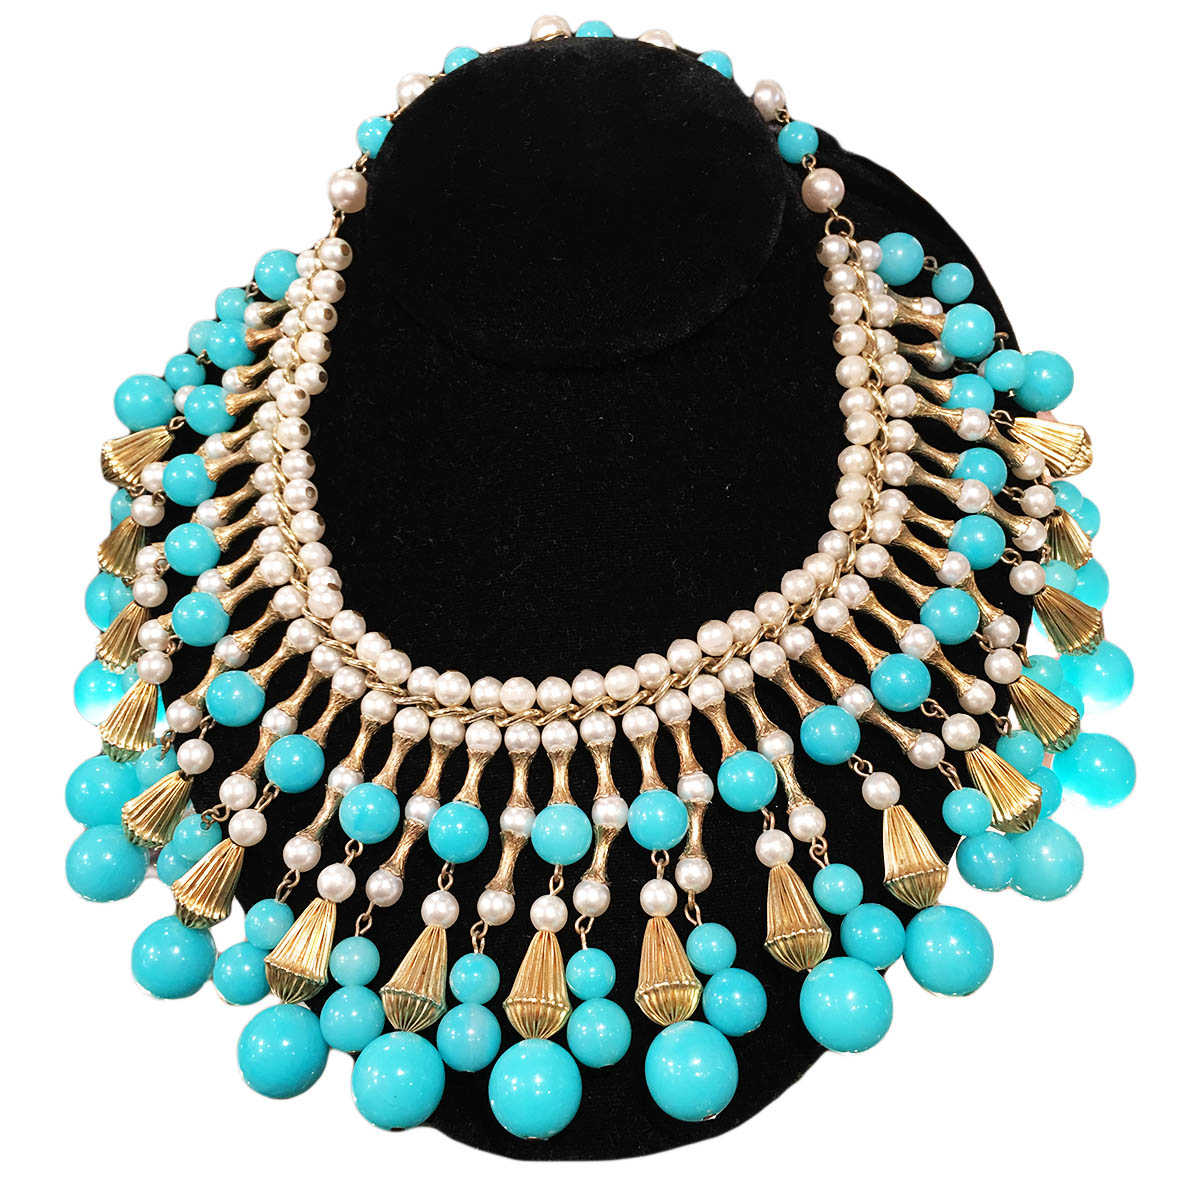 Vintage "Trifari" Turquoise Droplet Bead Necklace c.1960s